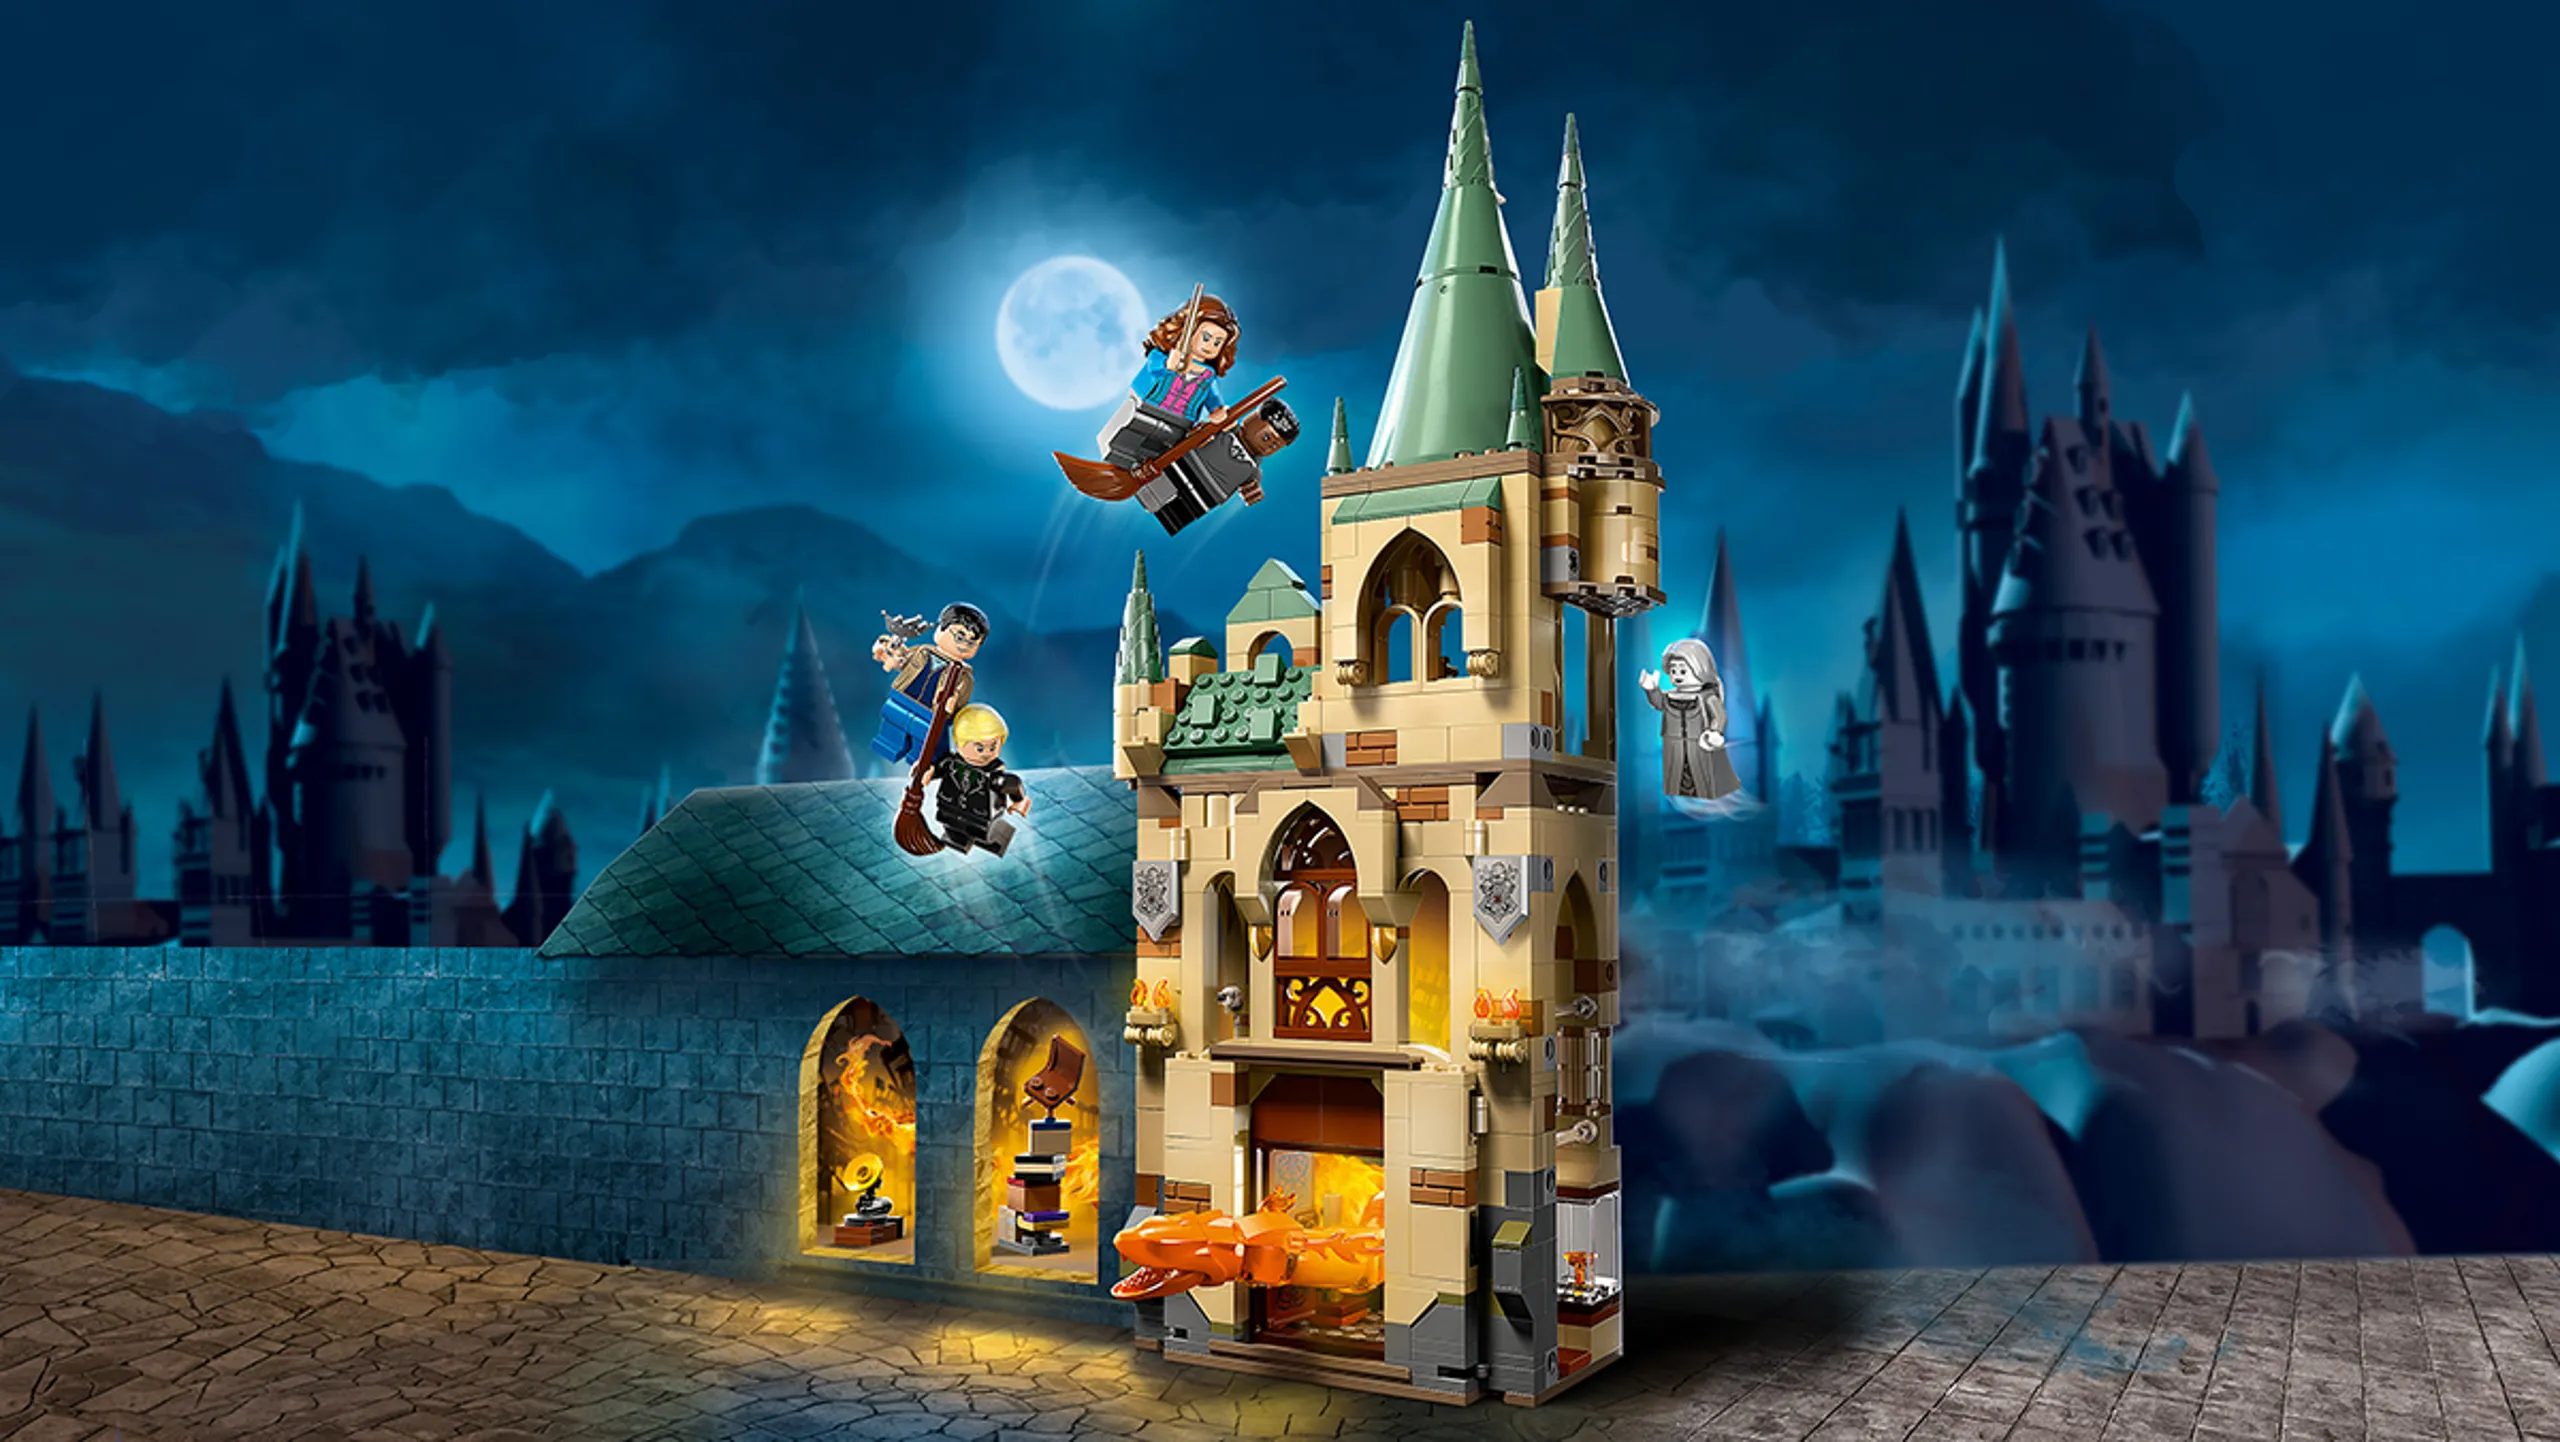 LEGO Harry Potter Hogwarts: Sirius's Rescue Set - LEGO - Dancing